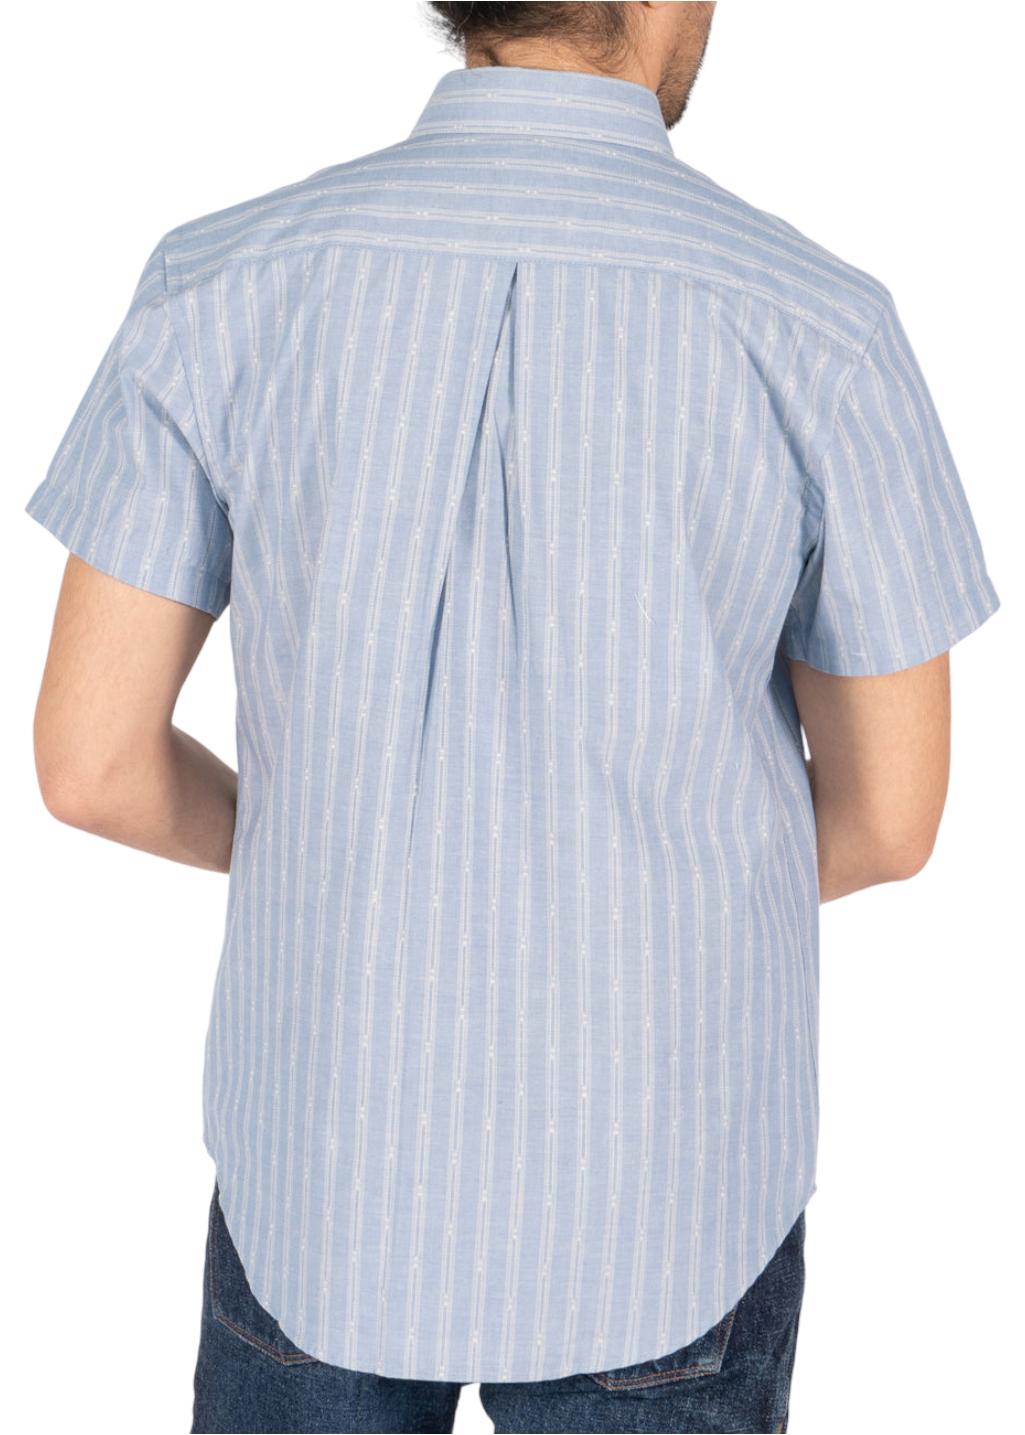 Naked & Famous Denim - Short Sleeve Easy Shirt - Vintage Dobby Stripes - Pale Blue - Hardpressed Print Studio Inc.